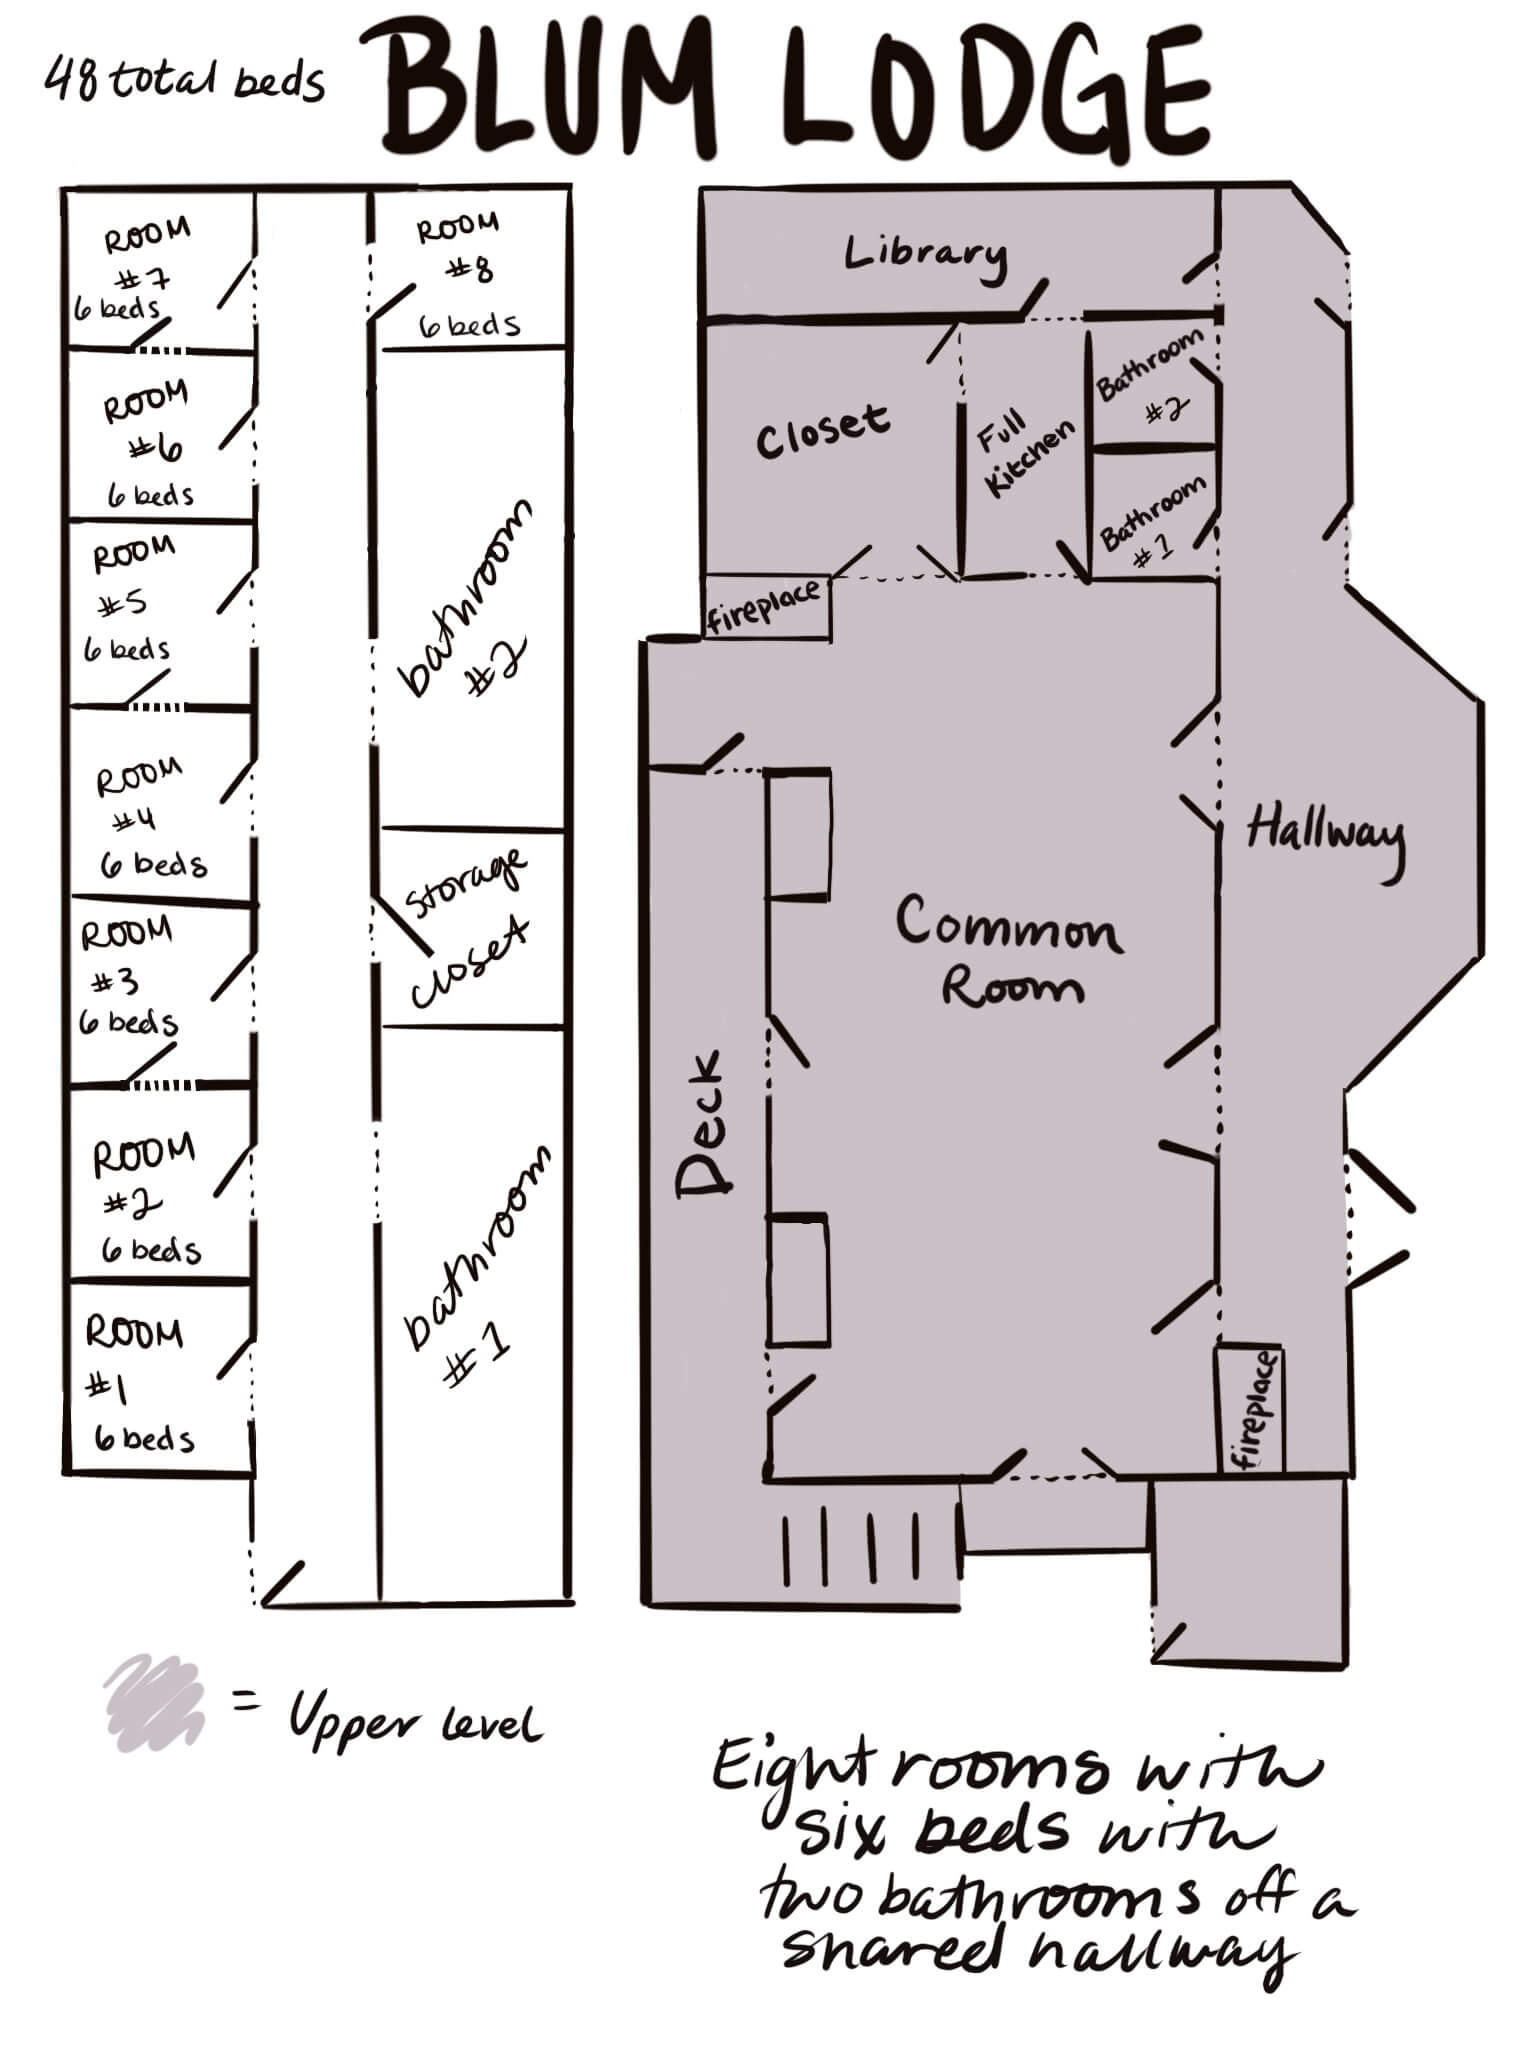 Blum lodge layout